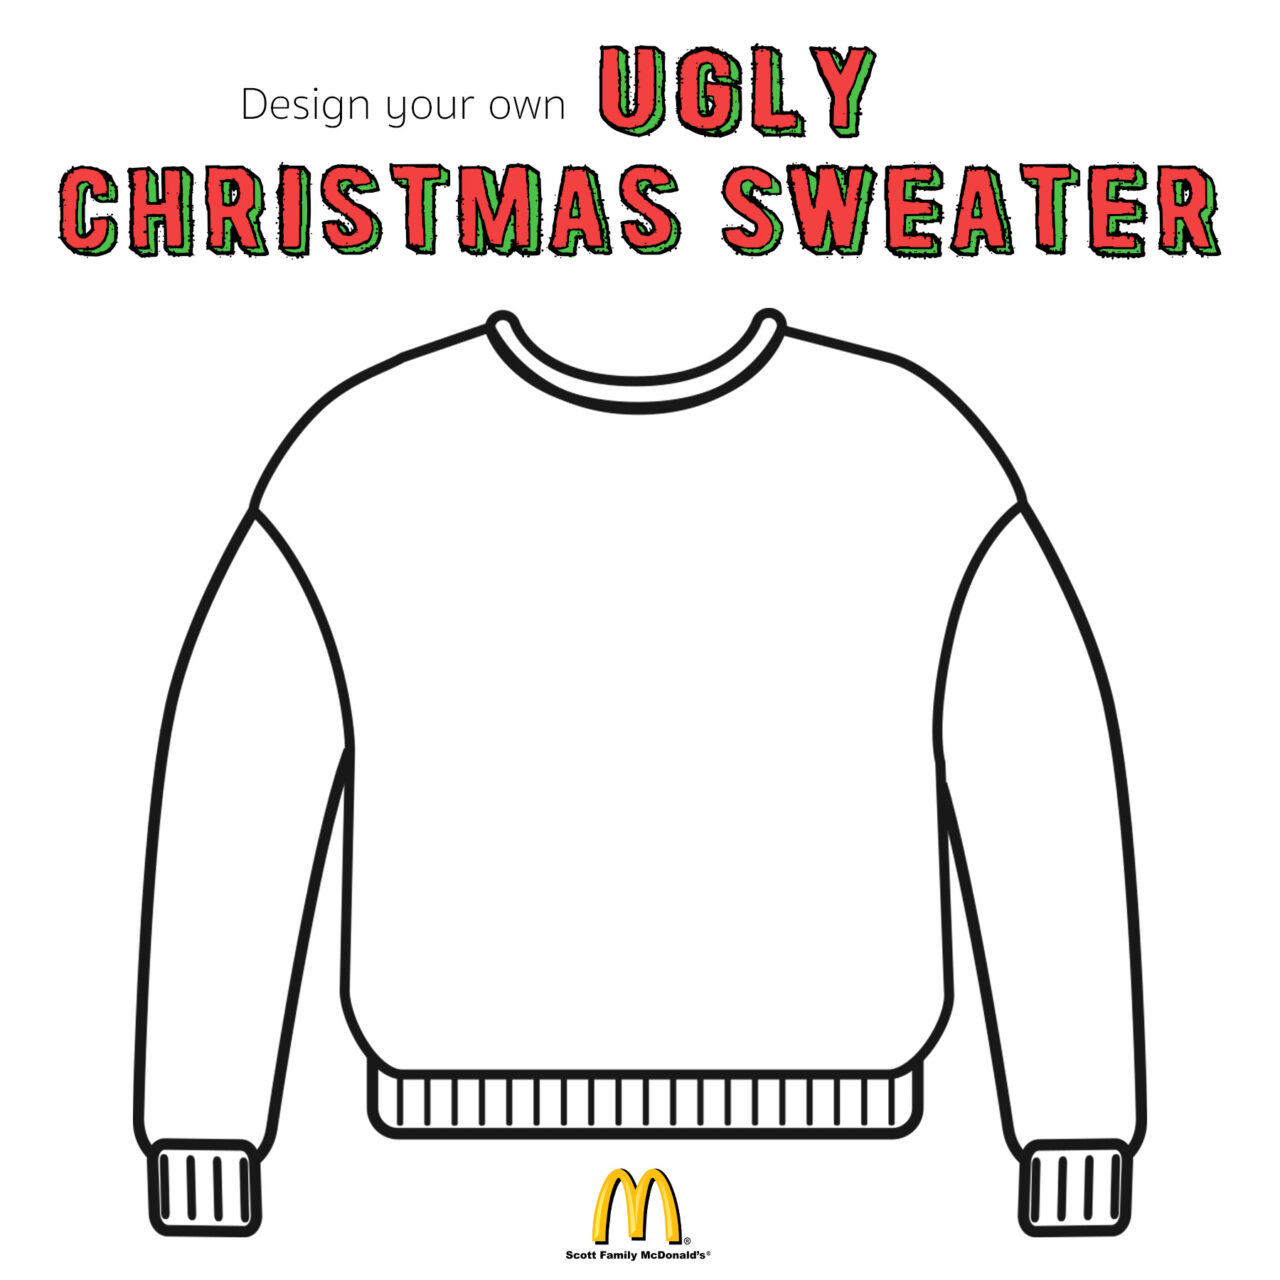 ugly sweater template - Scott Family McDonalds